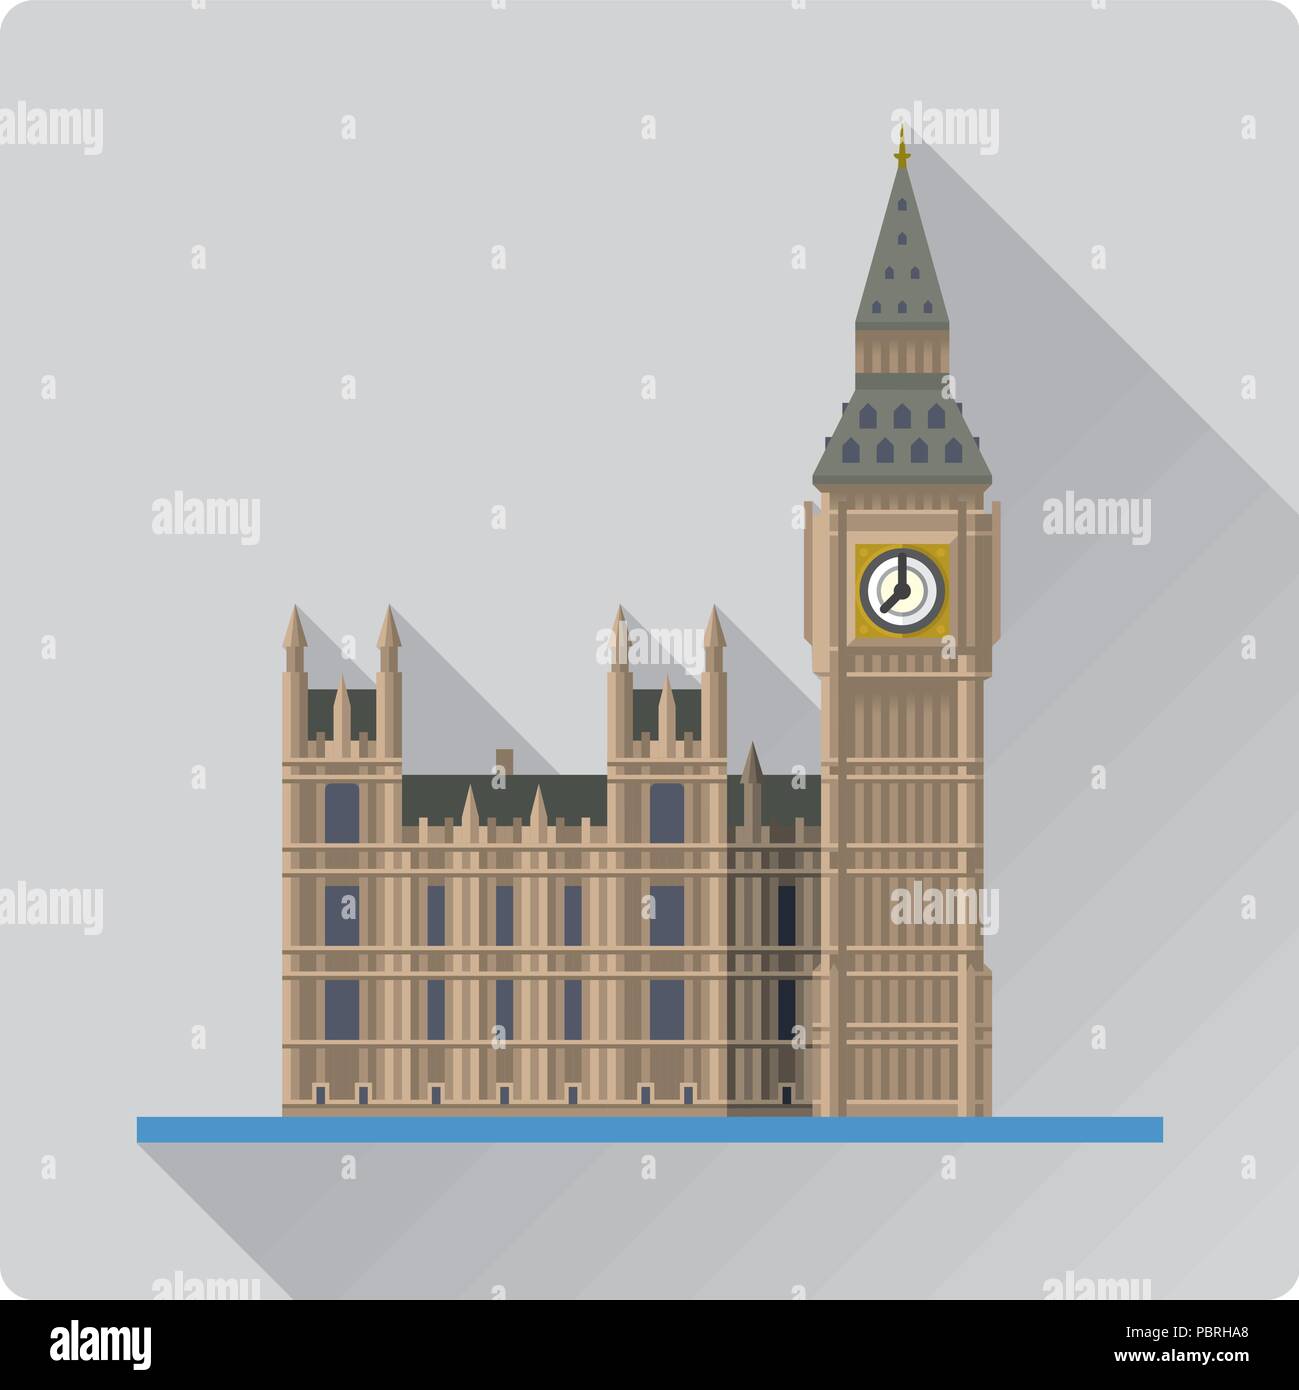 Flache Bauweise lange Schatten Vector Illustration des Big Ben, das Elizabeth Tower in Westminster Palace, London, England Stock Vektor